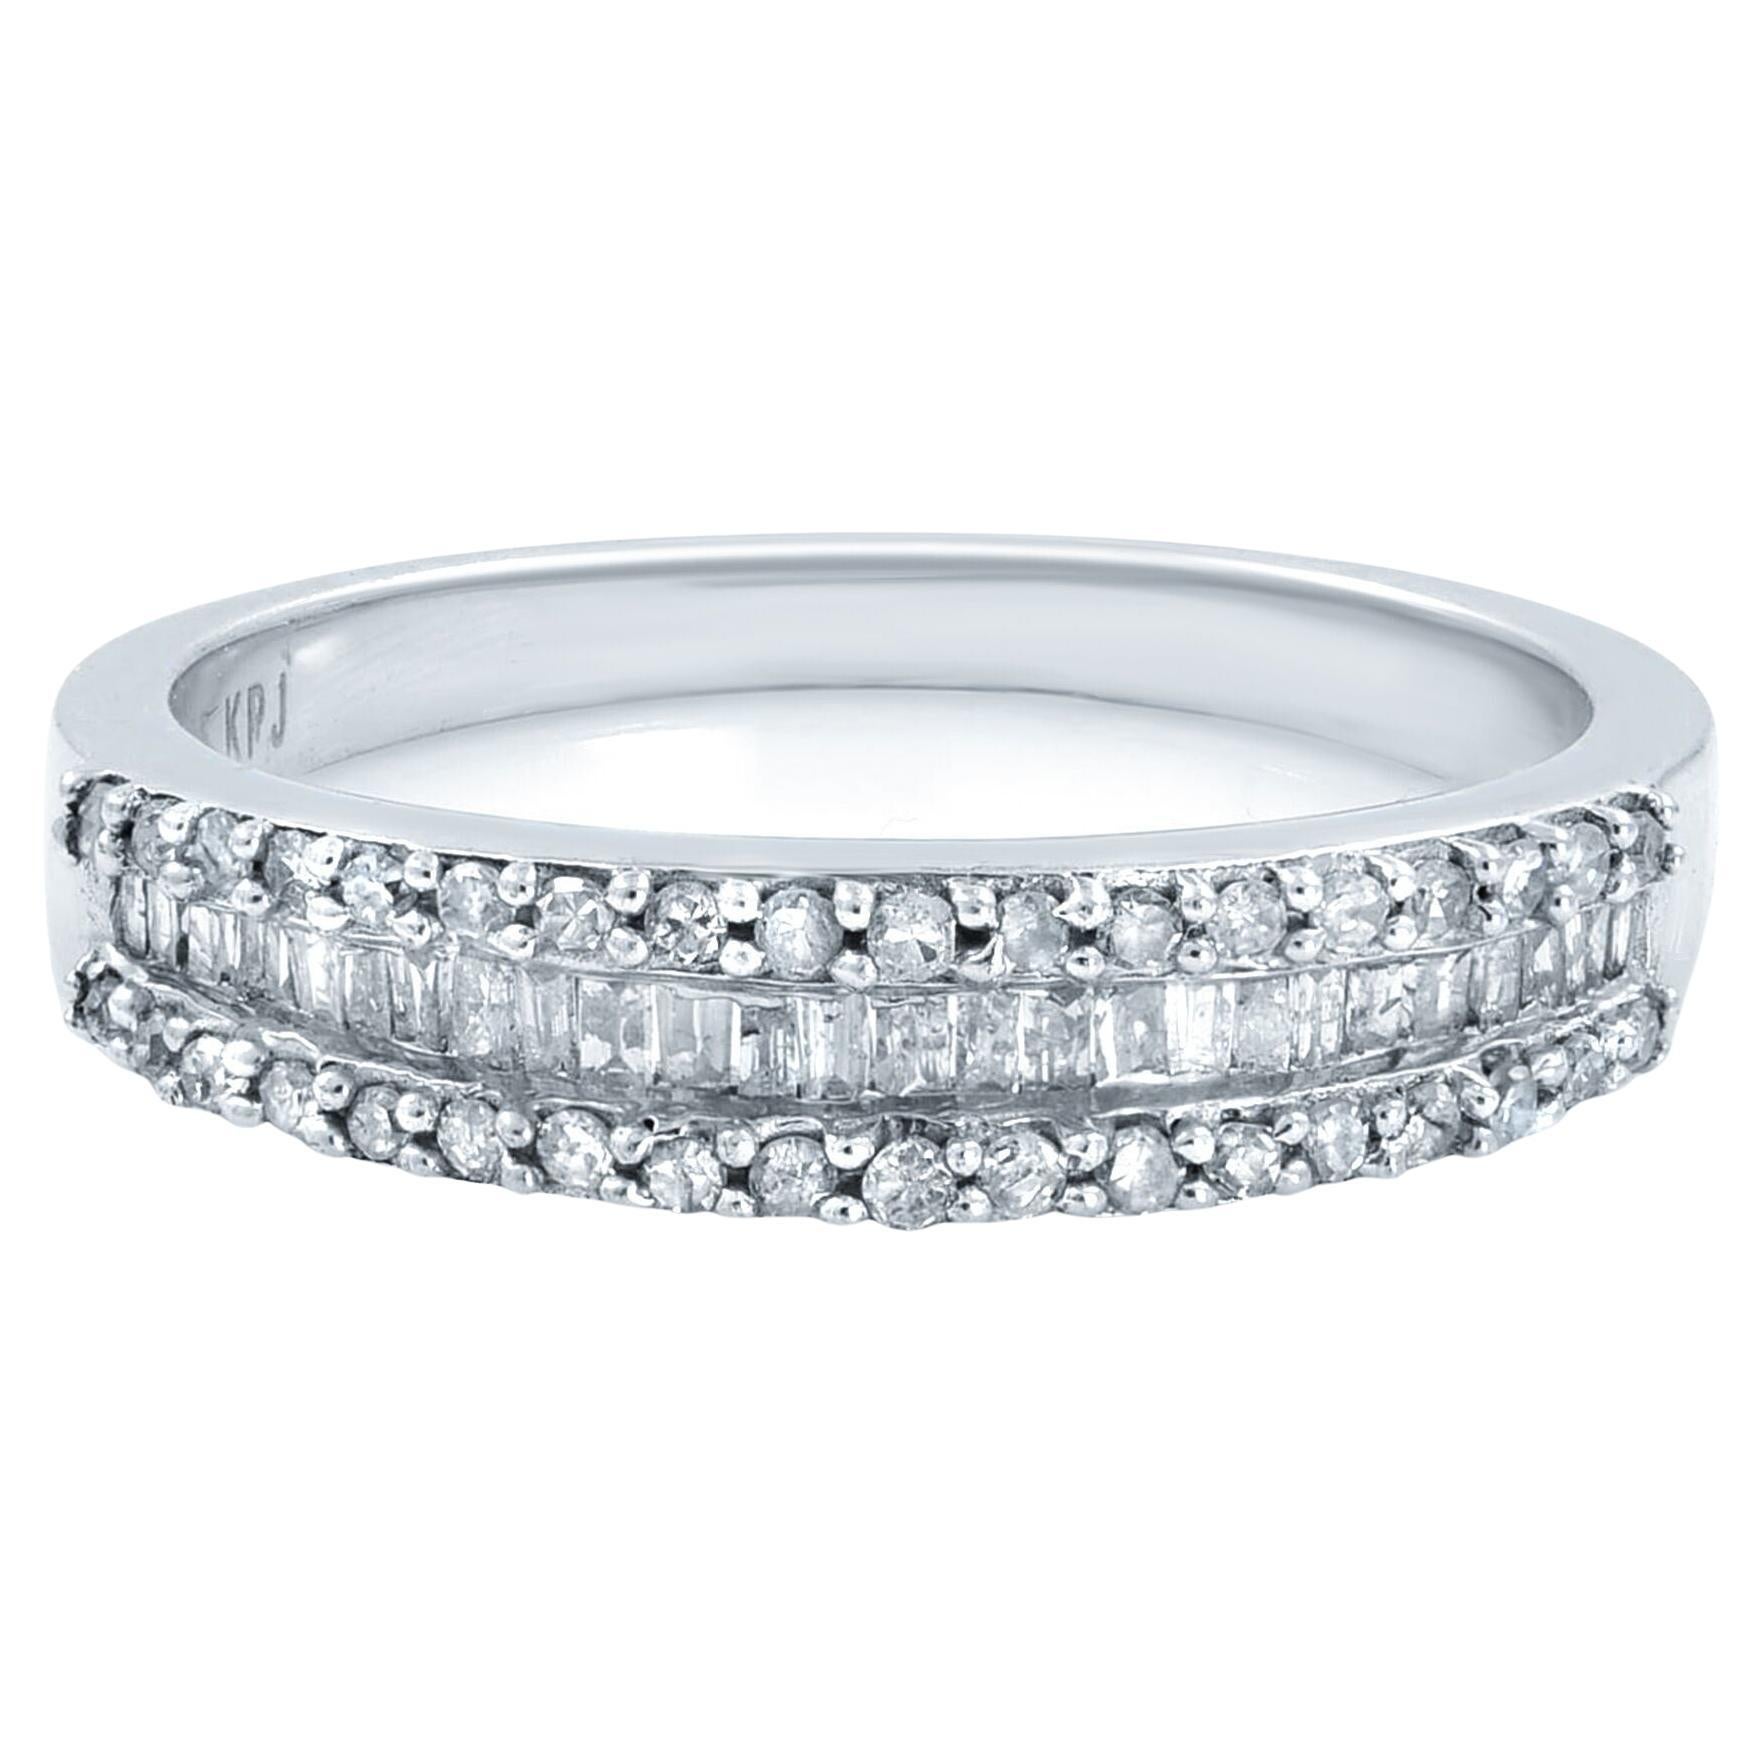 Rachel Koen Round Baguette Cut Diamond Ring Sterling Silver 1.00Cttw For Sale